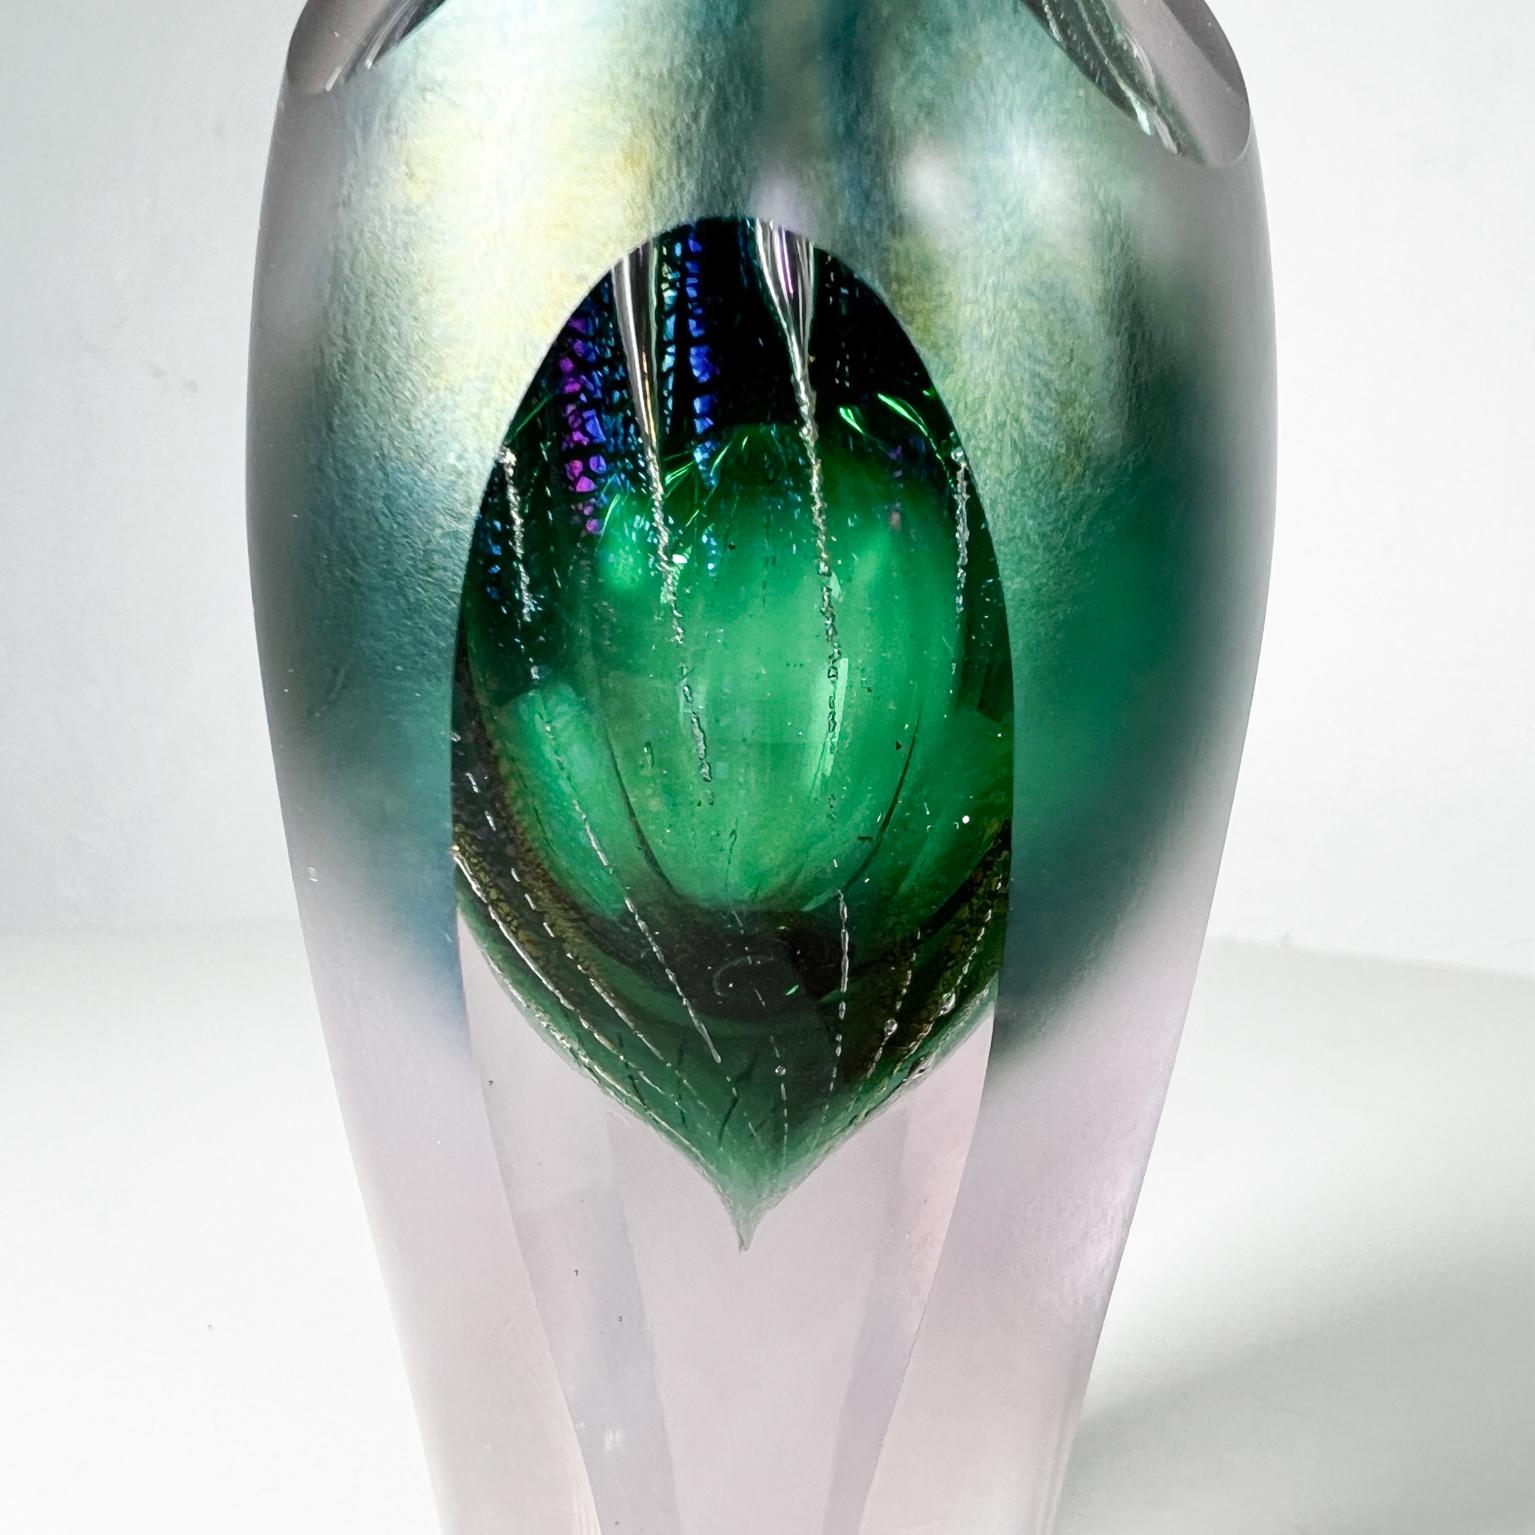 1989 Studio Handblown Art Glass Green Vase Brian Maytum In Good Condition For Sale In Chula Vista, CA